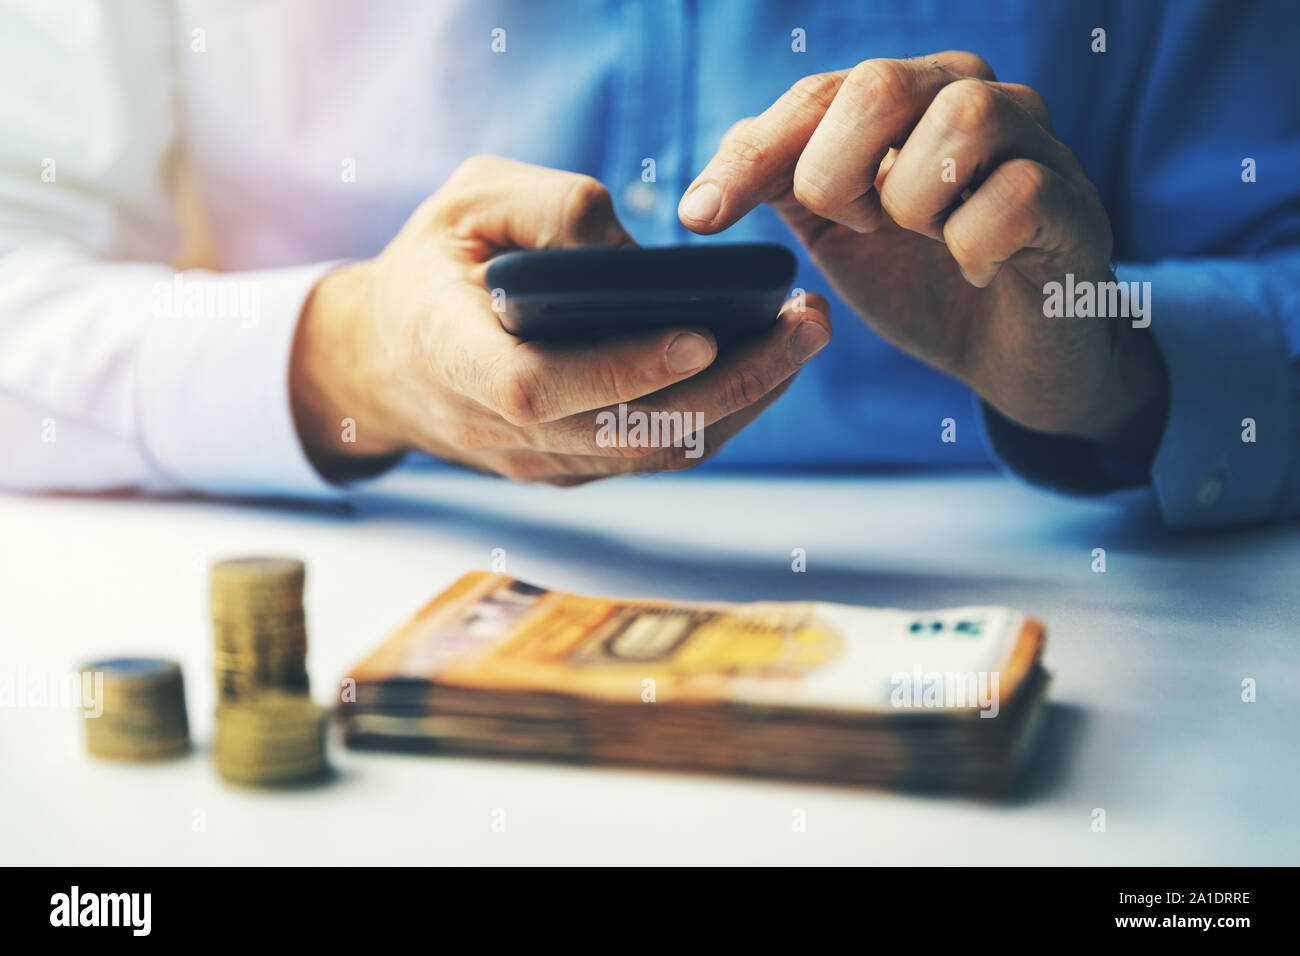 fintech concept - businessman using smart phone to make financial transactions Stock Photo